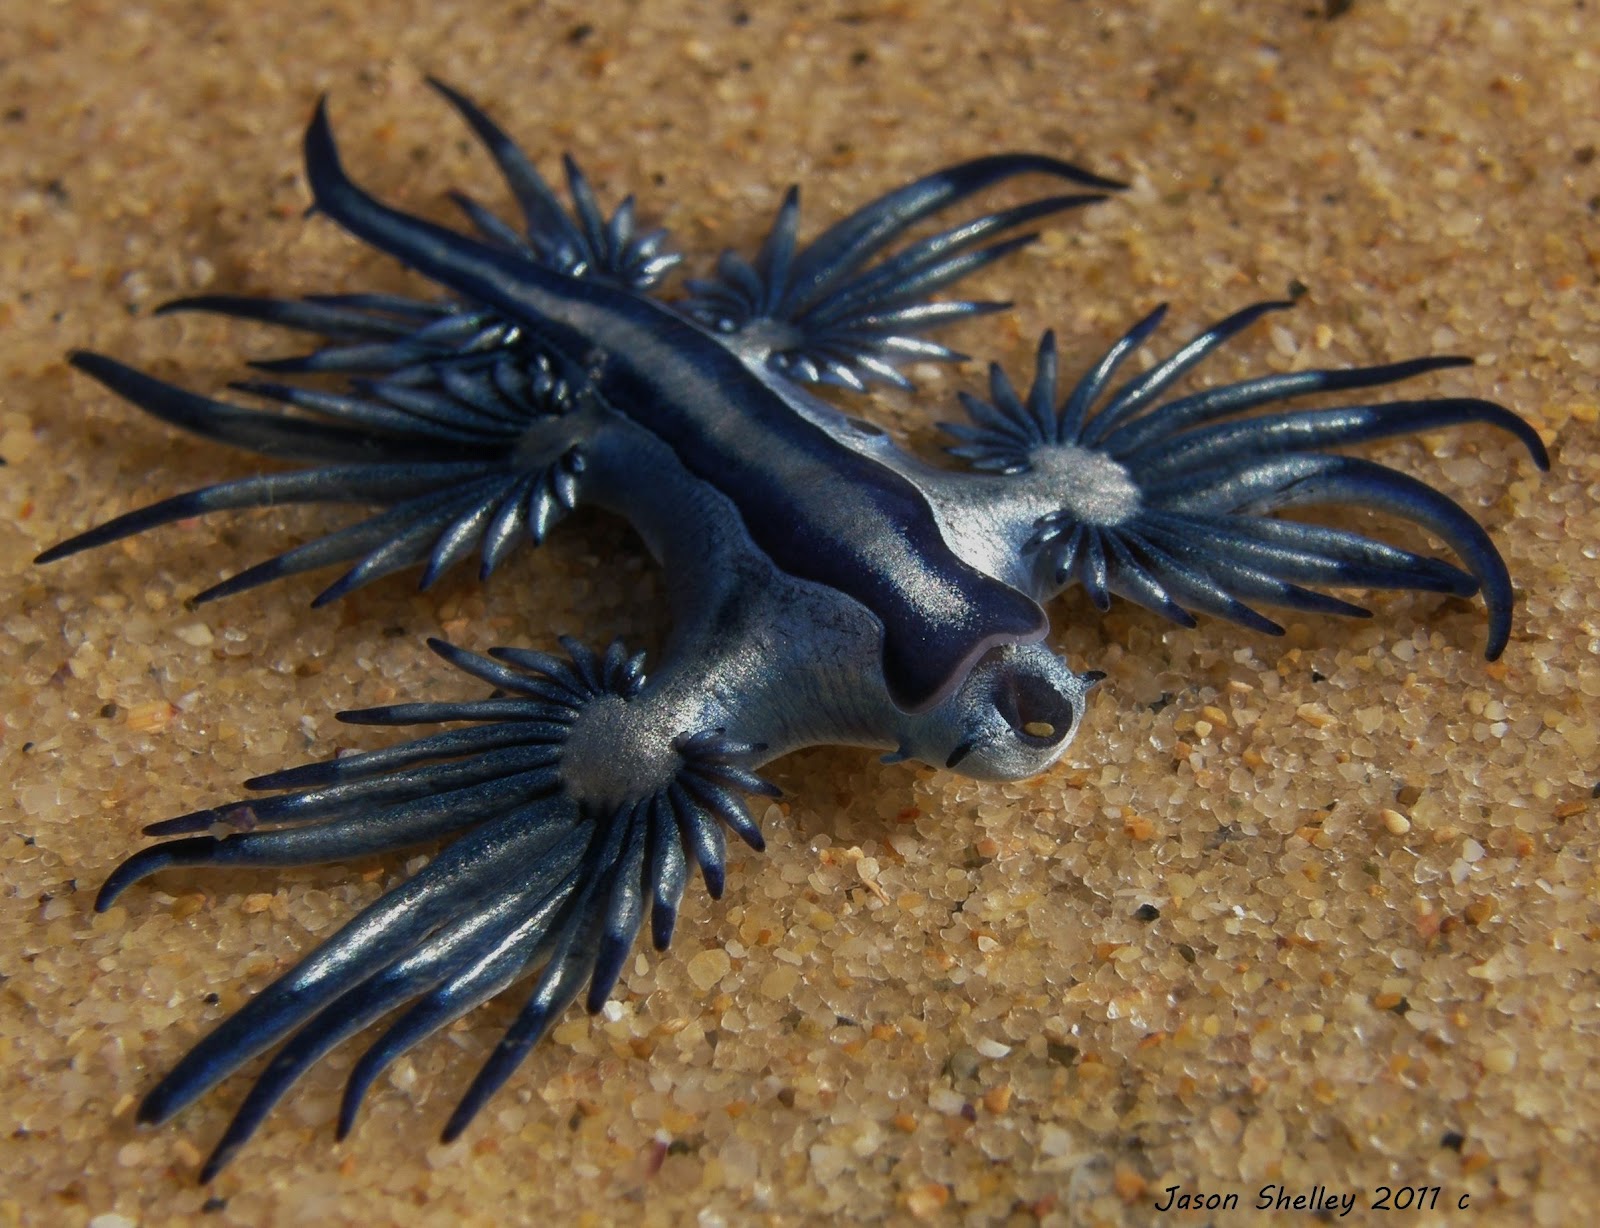 https://2.bp.blogspot.com/-JN5aLI7oHfY/UFb89OQtmHI/AAAAAAAADzw/j_86IUoHiE4/s1600/blue-dragon-mollusk-nature-pictures_2.jpg